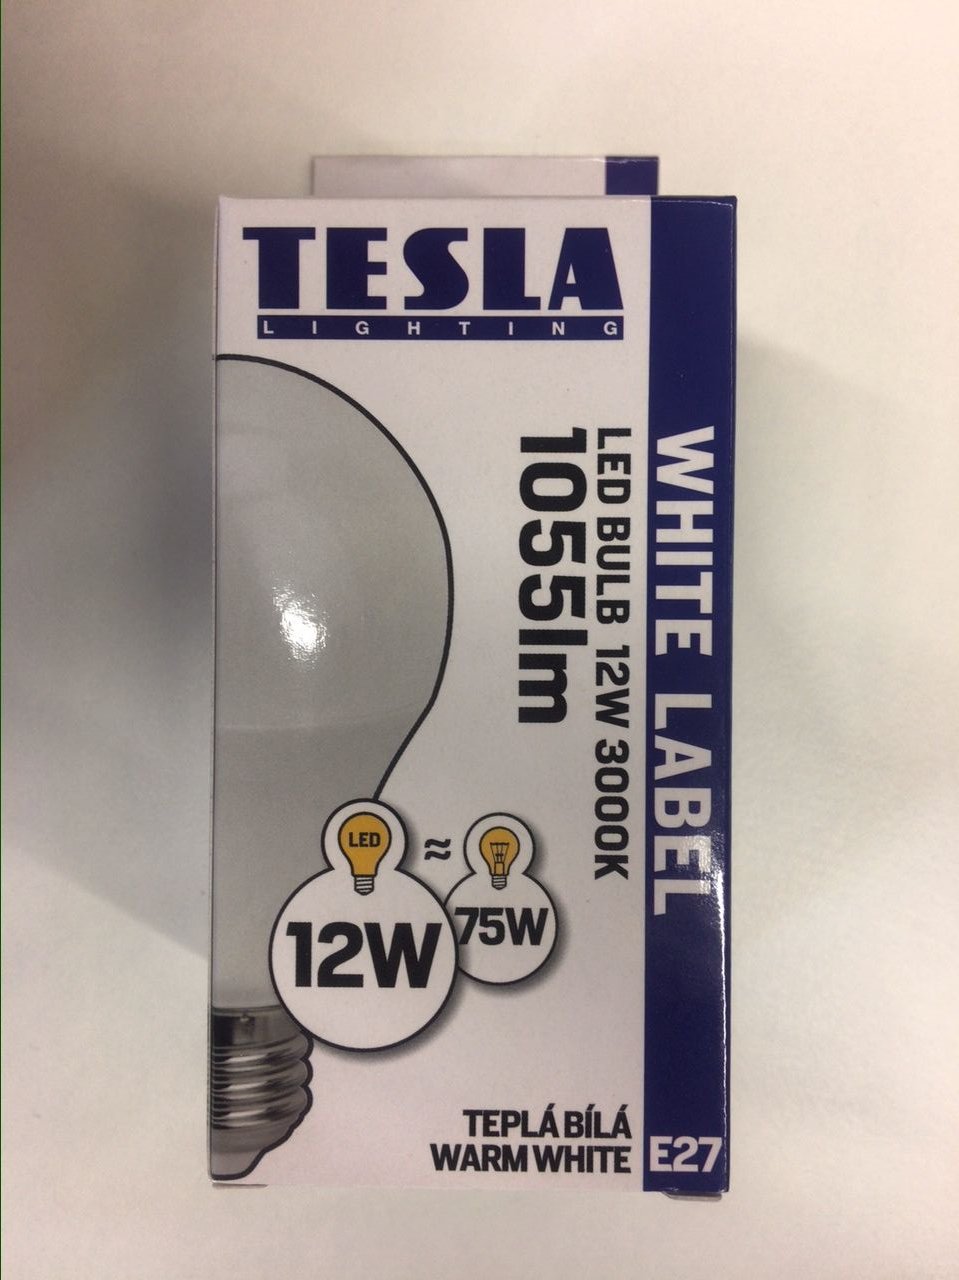 20 ks LED žárovek 12W Tesla 20 ks v krabici